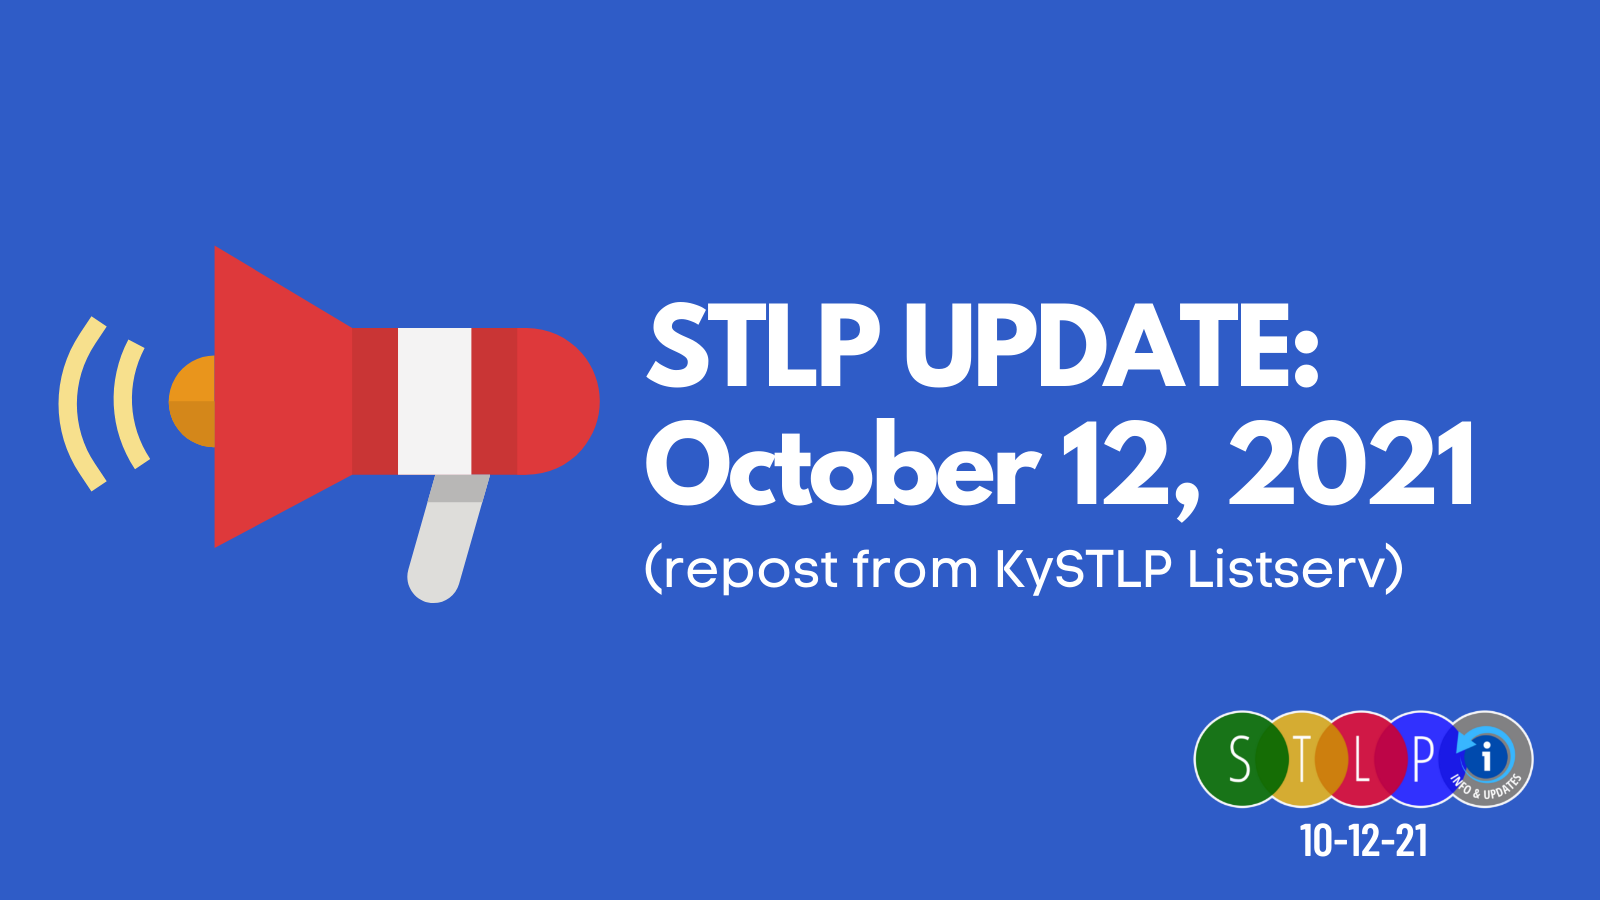 STLP update: 10-12-21 repost from KySTLP Listserv